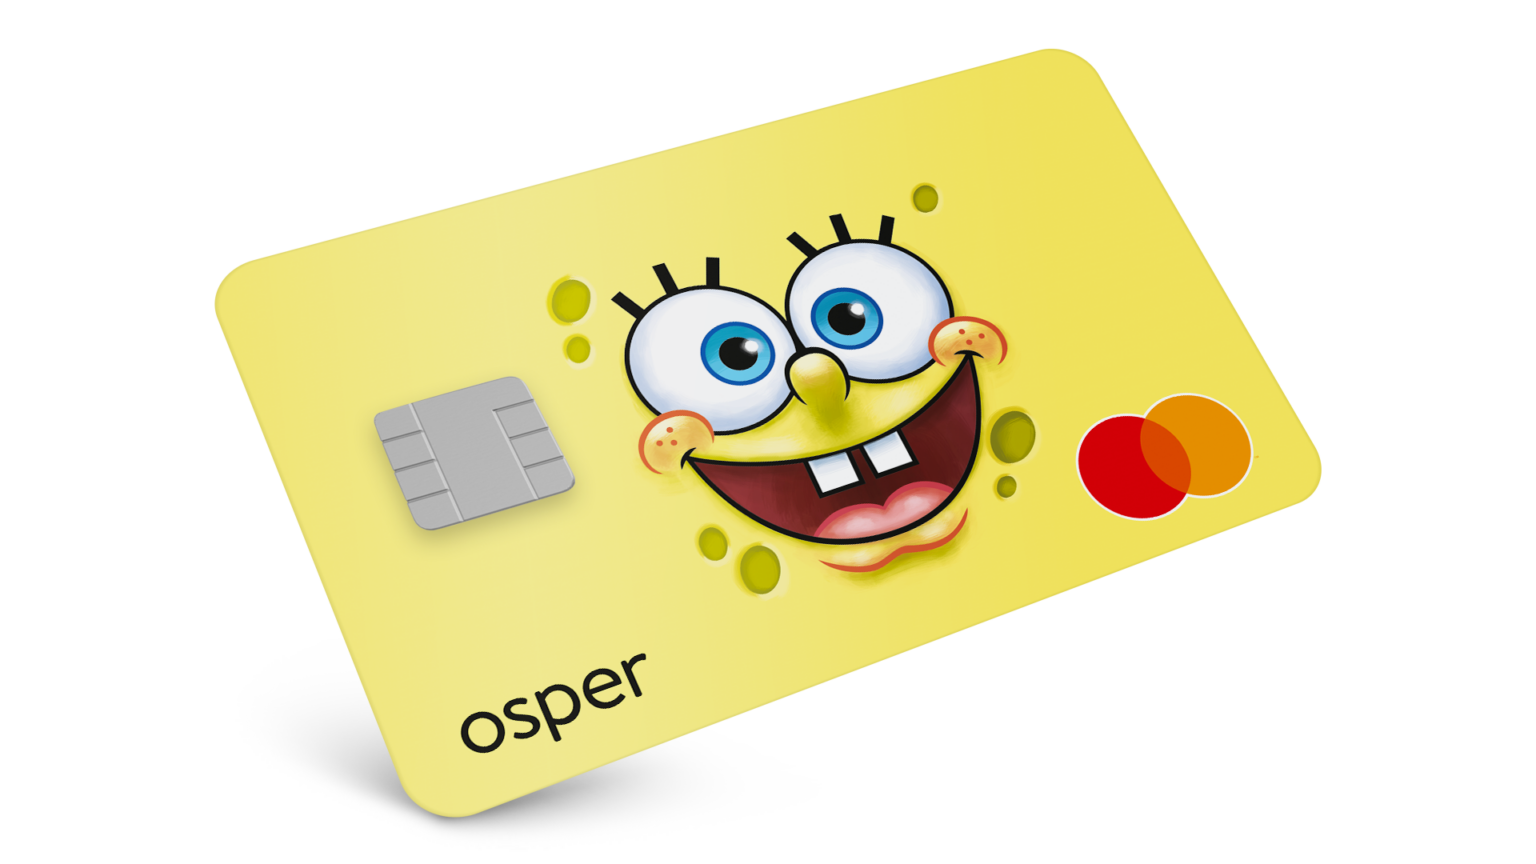 01-osper-debit-card-sponge-bob-the-bulb